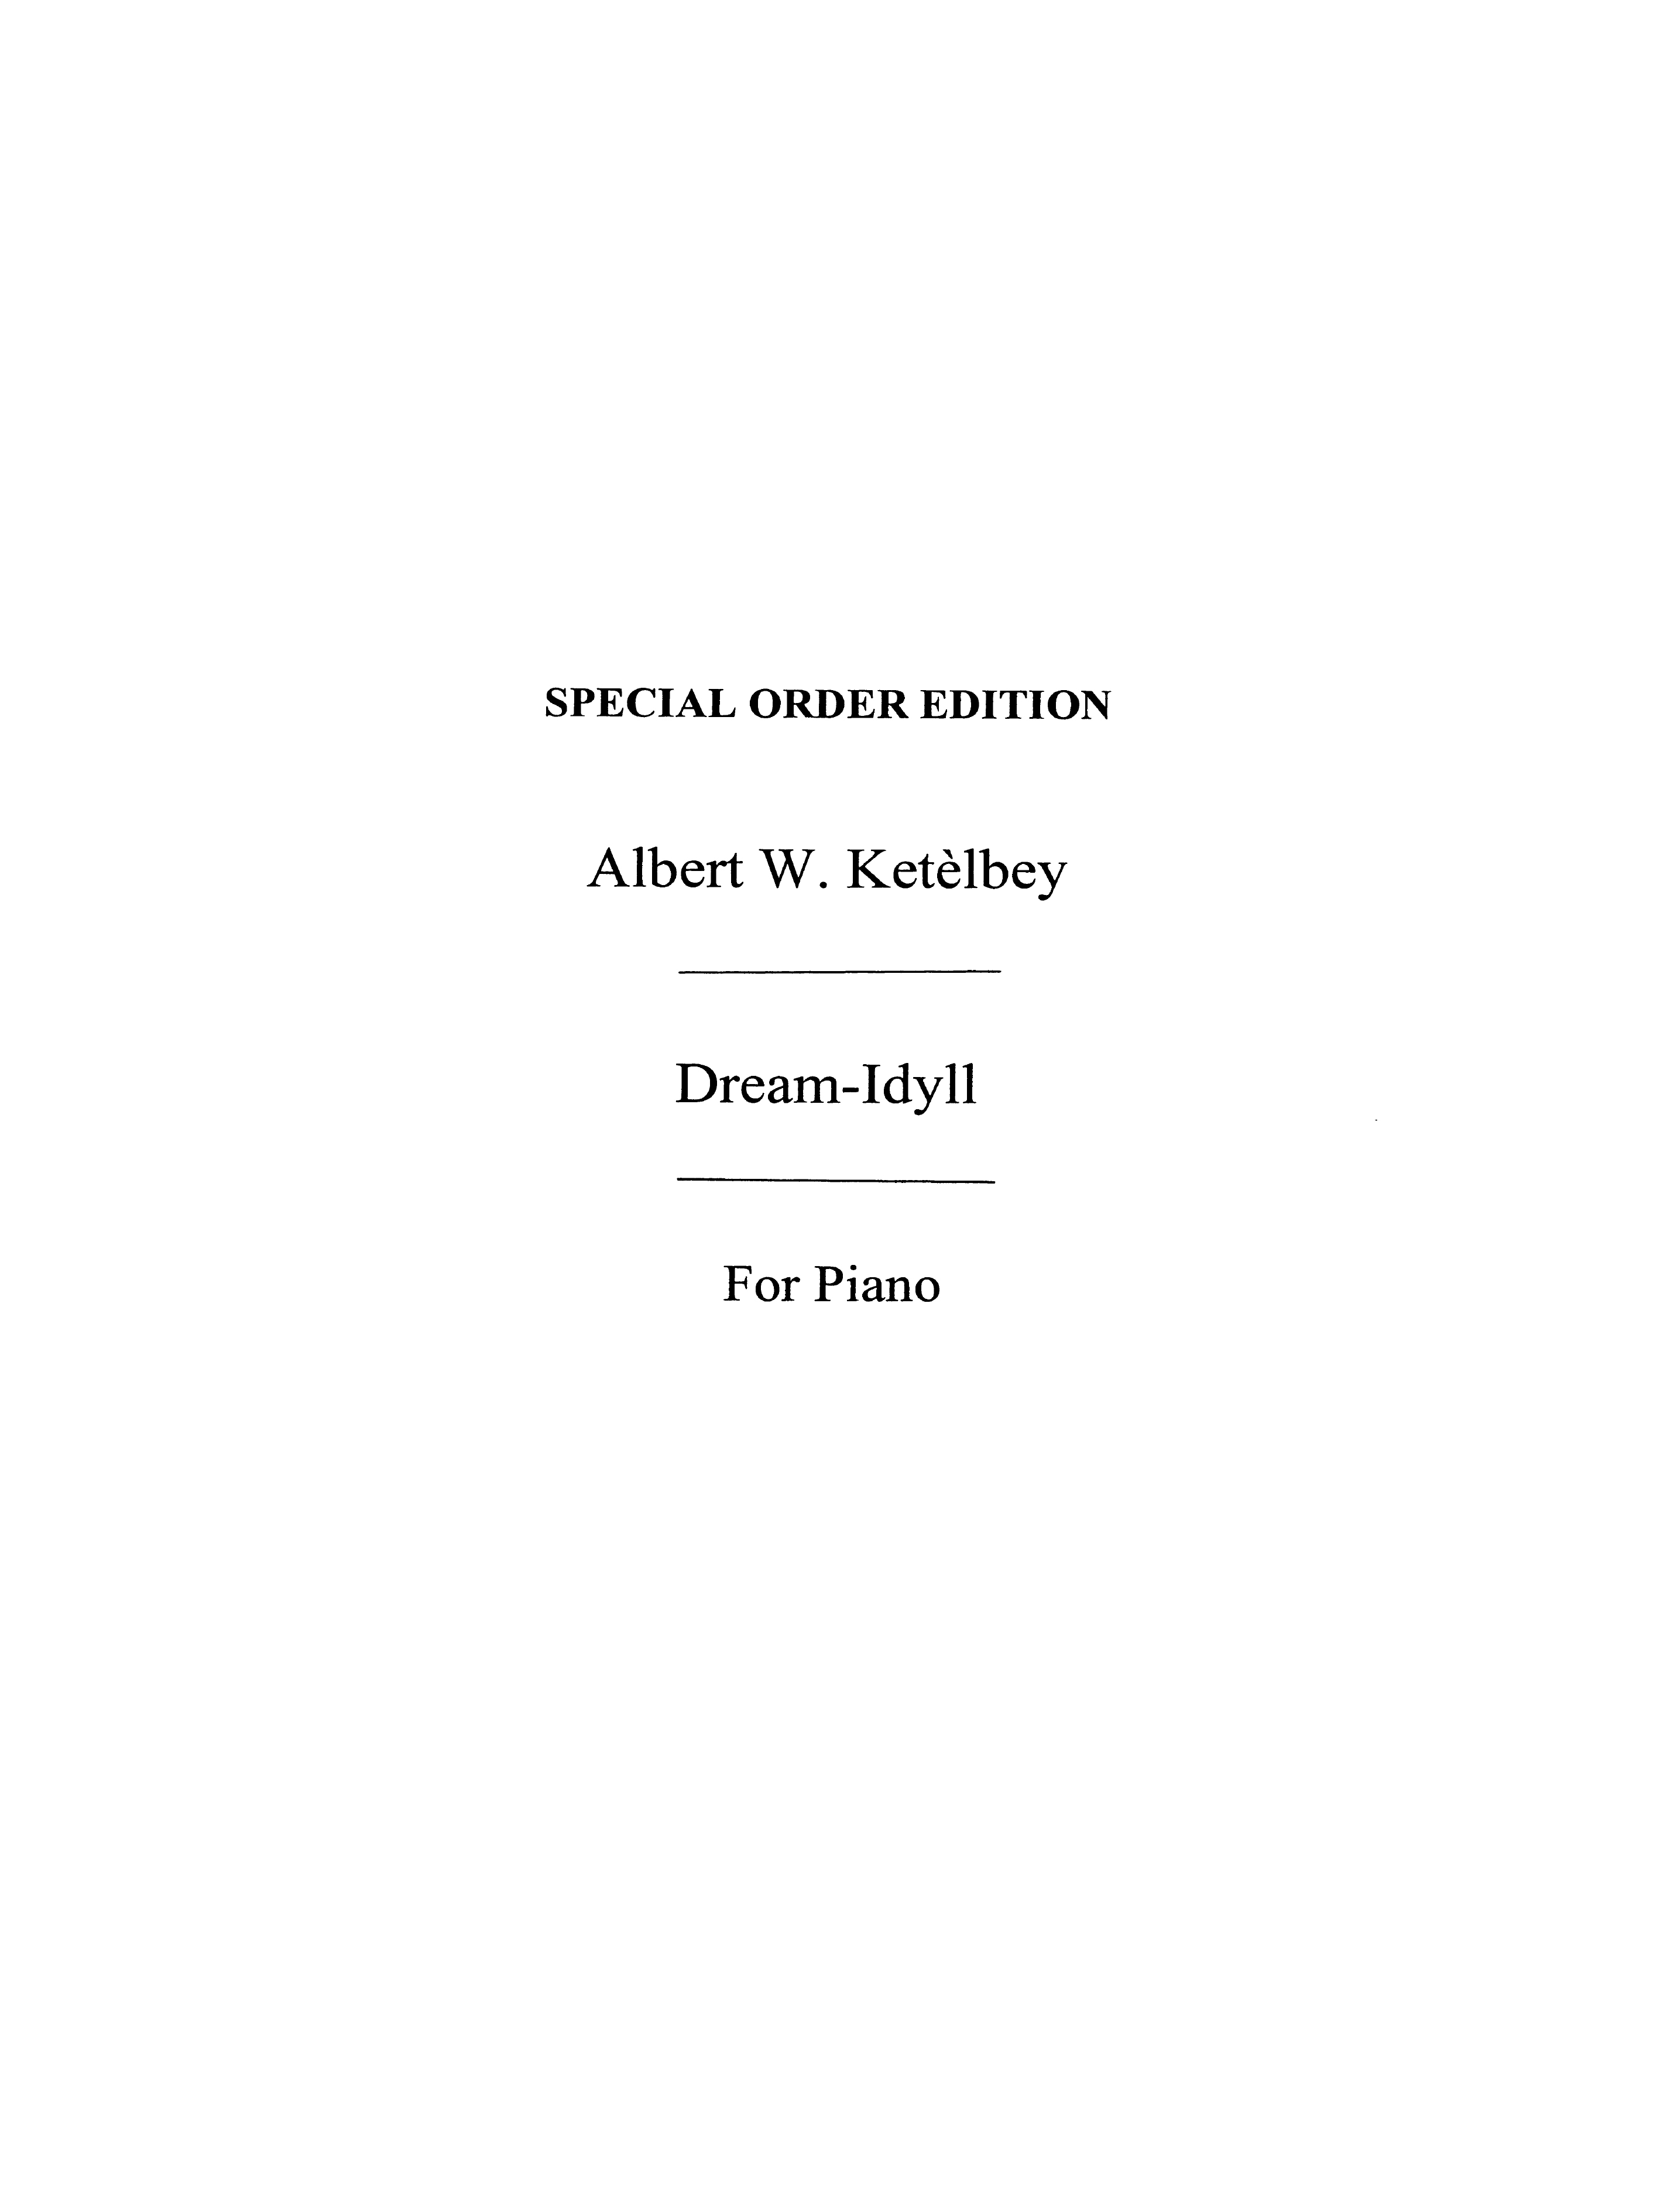 Albert Ketlbey: Dream Idyll: Piano: Instrumental Work